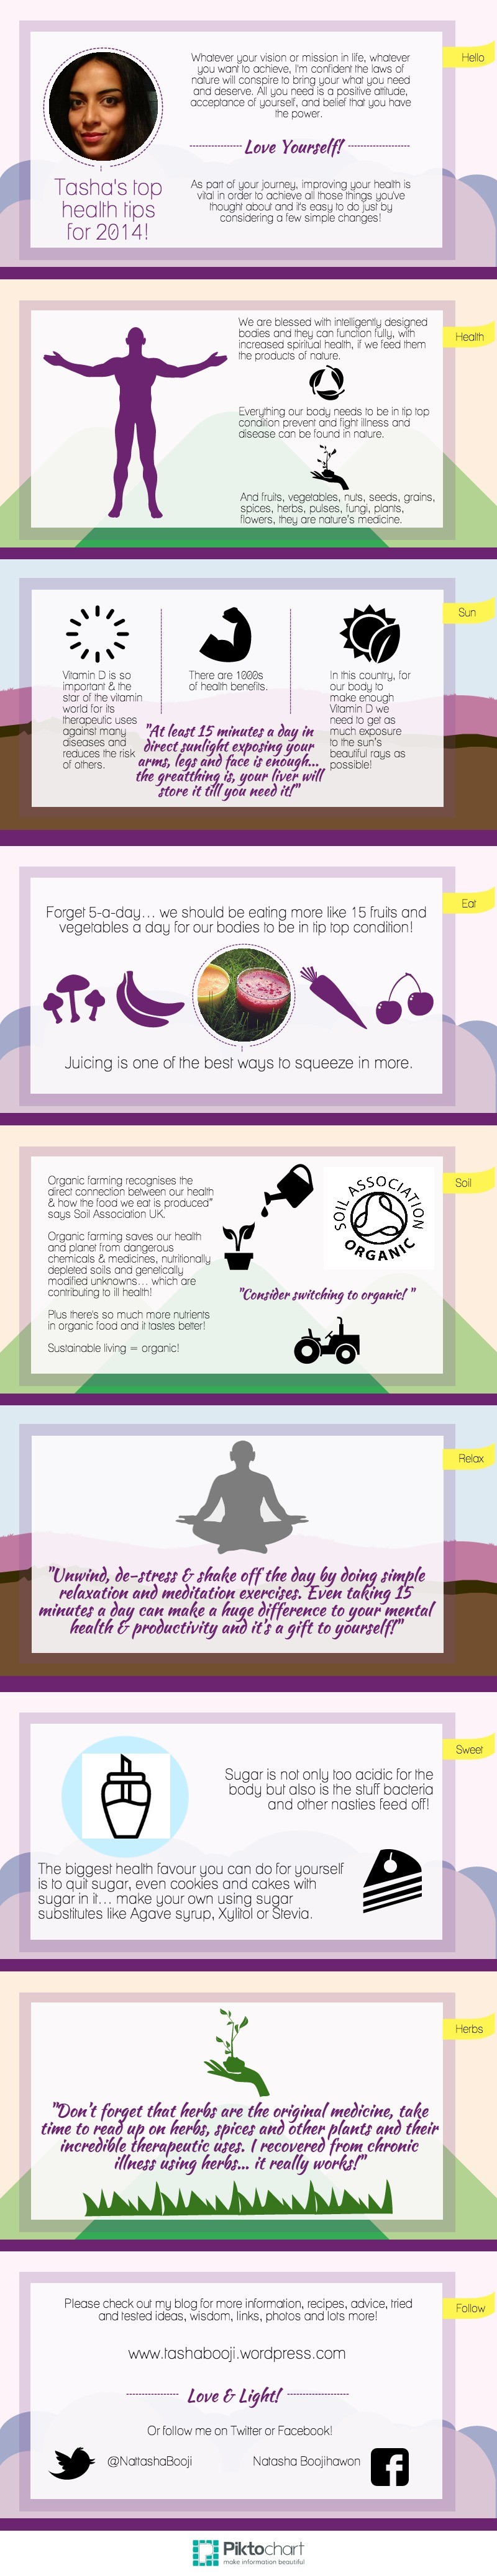 Tasha's Health Tips 2014 Infographic Copy